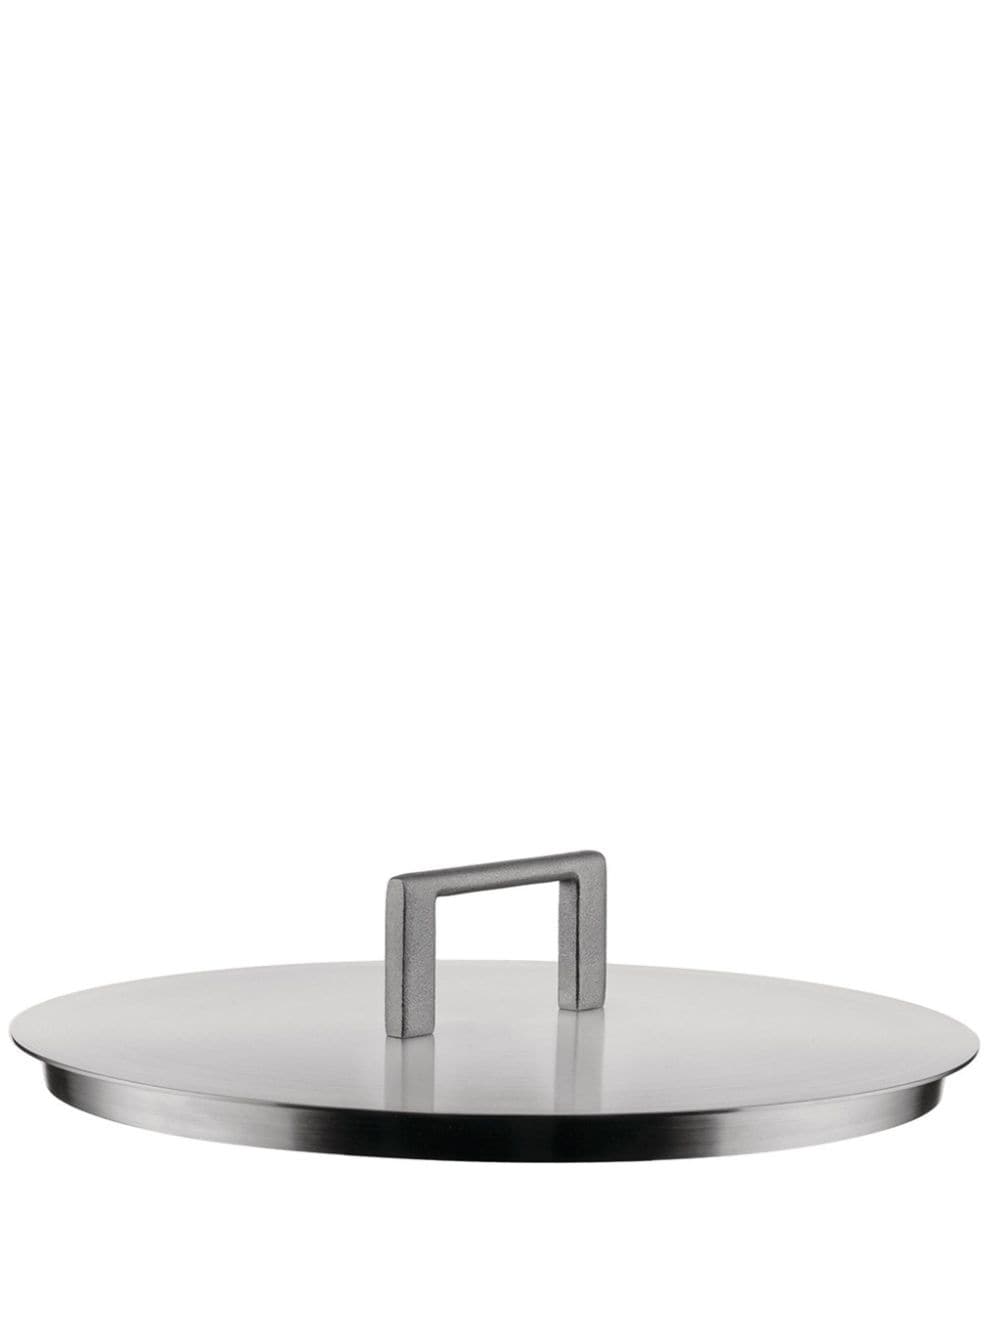 Alessi Convivio stainless steel pan lid (20cm) - Silver von Alessi